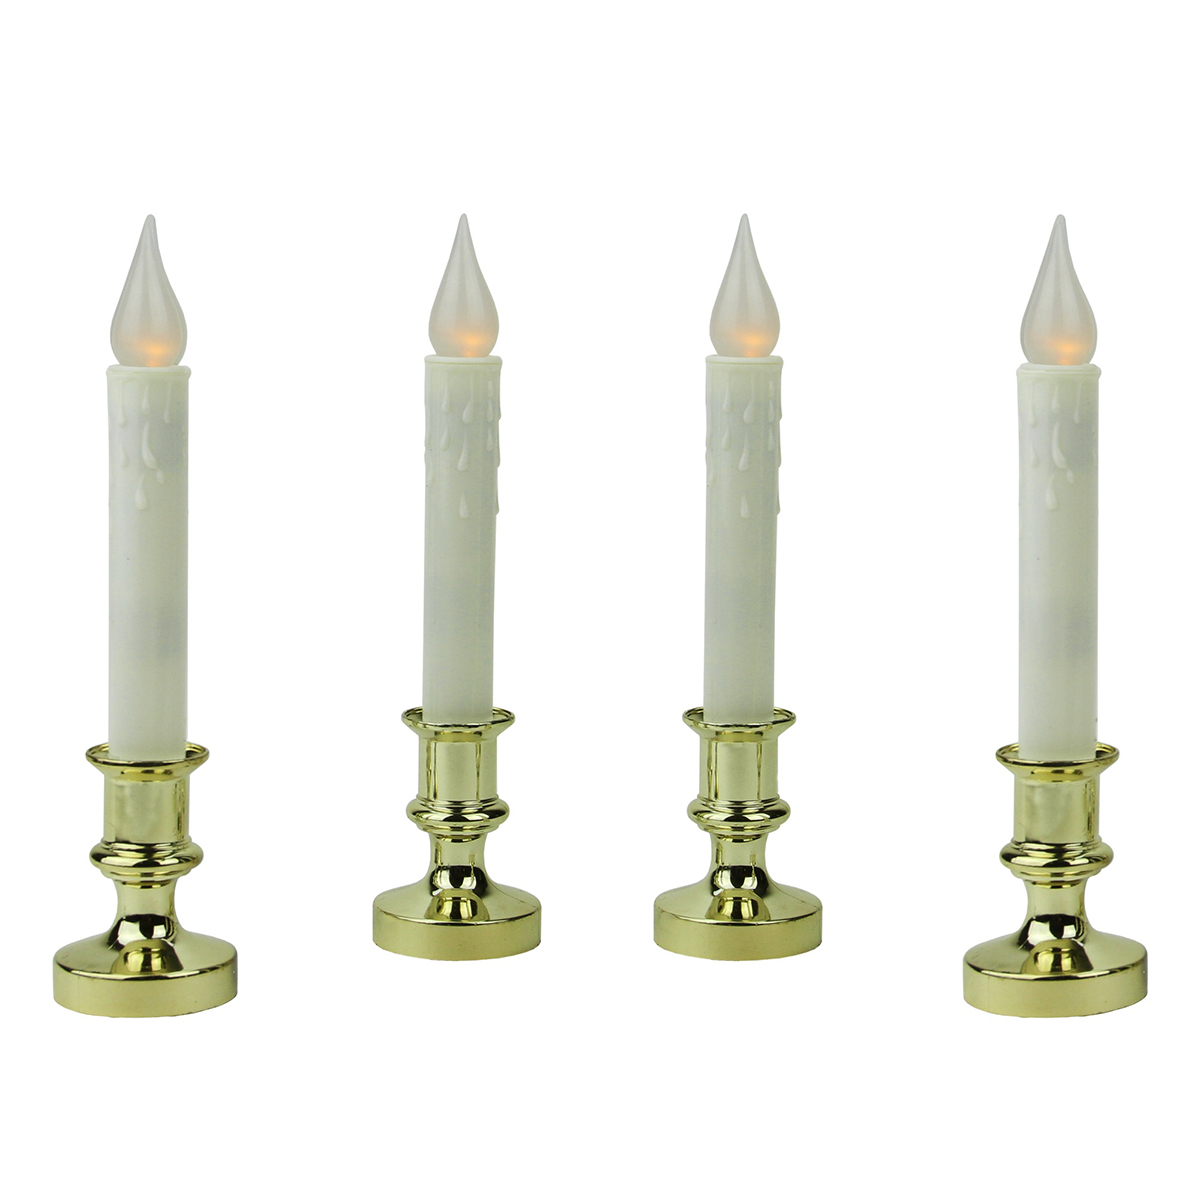 Northlight Seasonal Set Of 4 LED Window Christmas Candle